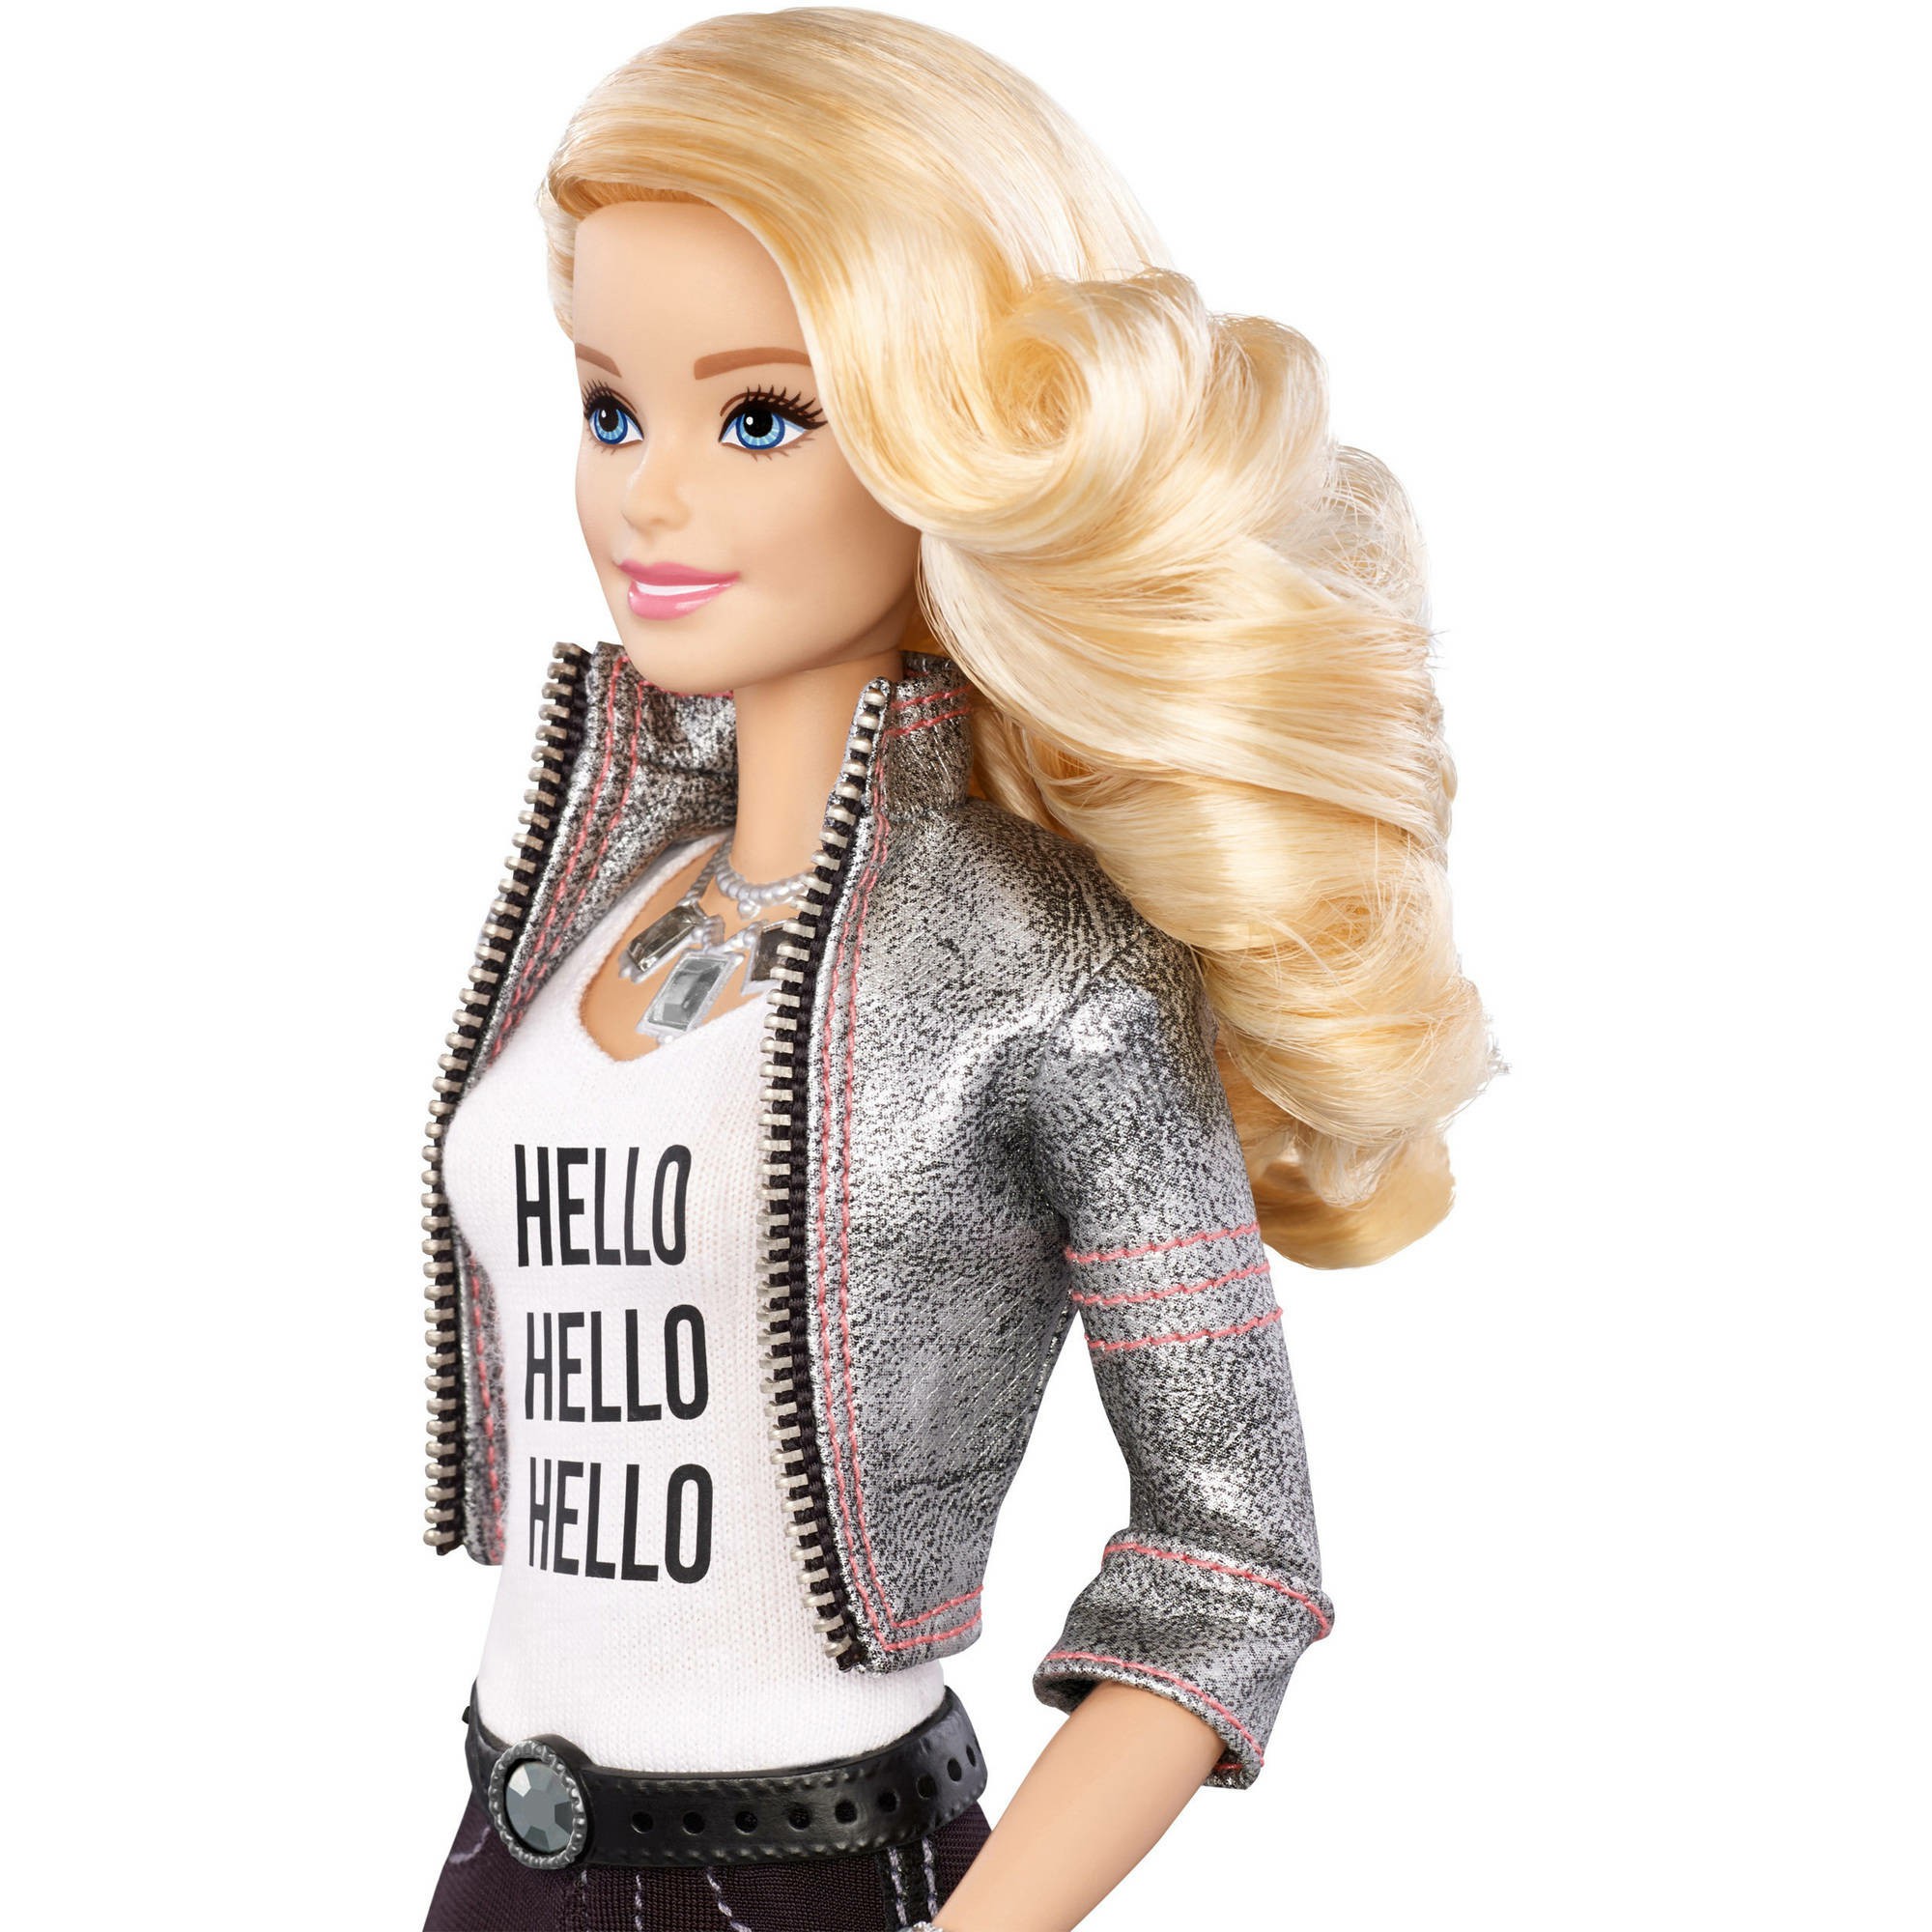 Кукла Barbie сияние моды, dgx82